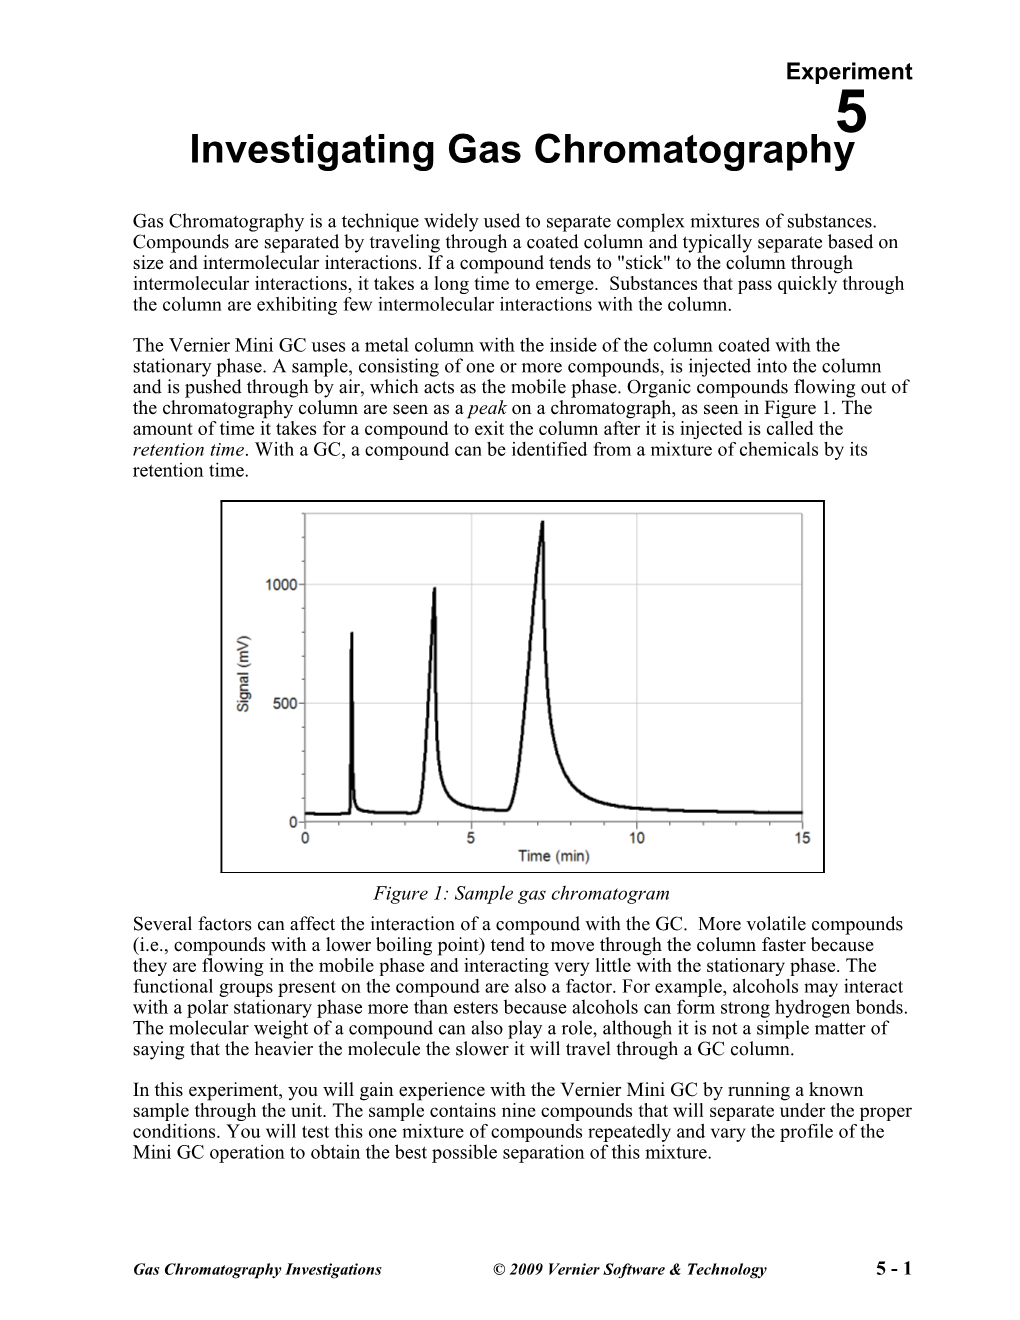 Investigating Gas Chromatography